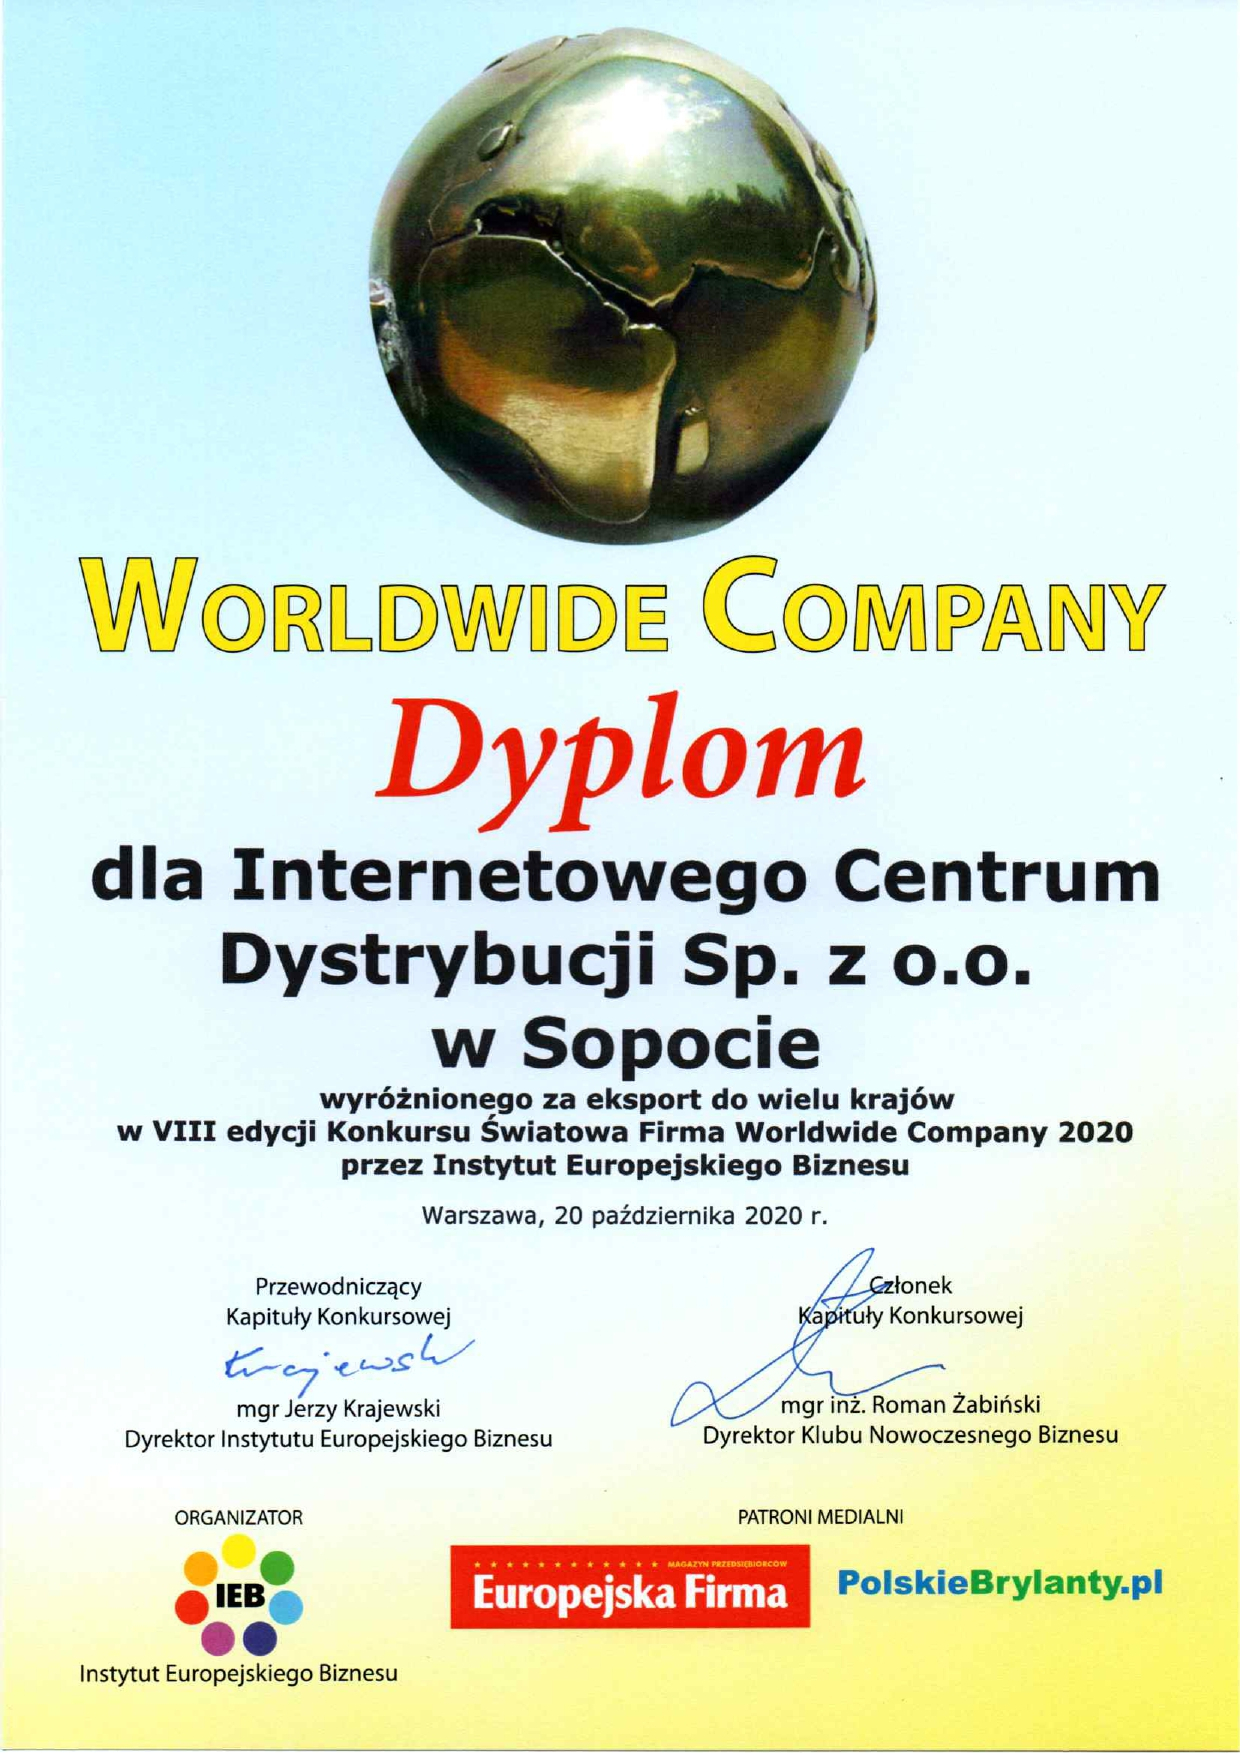 Worldwide Company 2020 - ICD